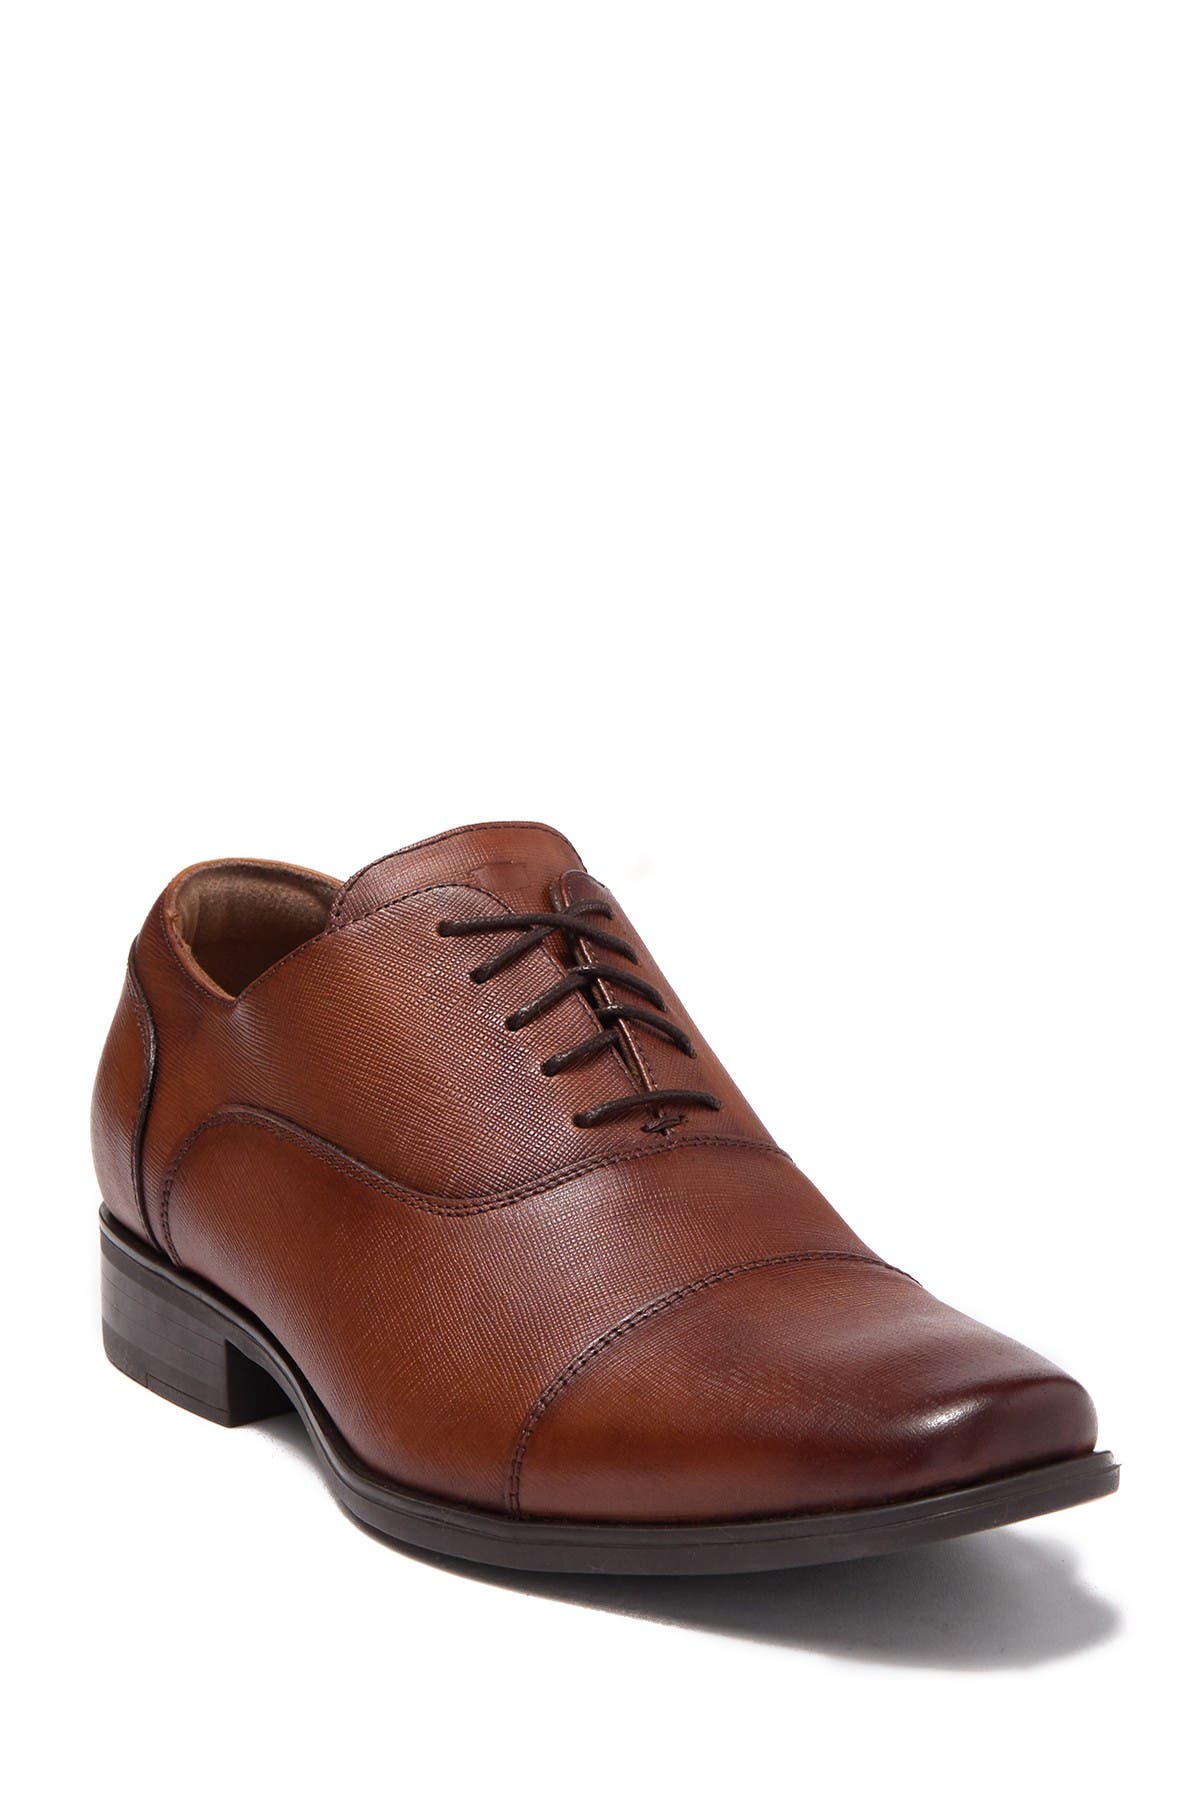 leather cap toe oxford dress shoe